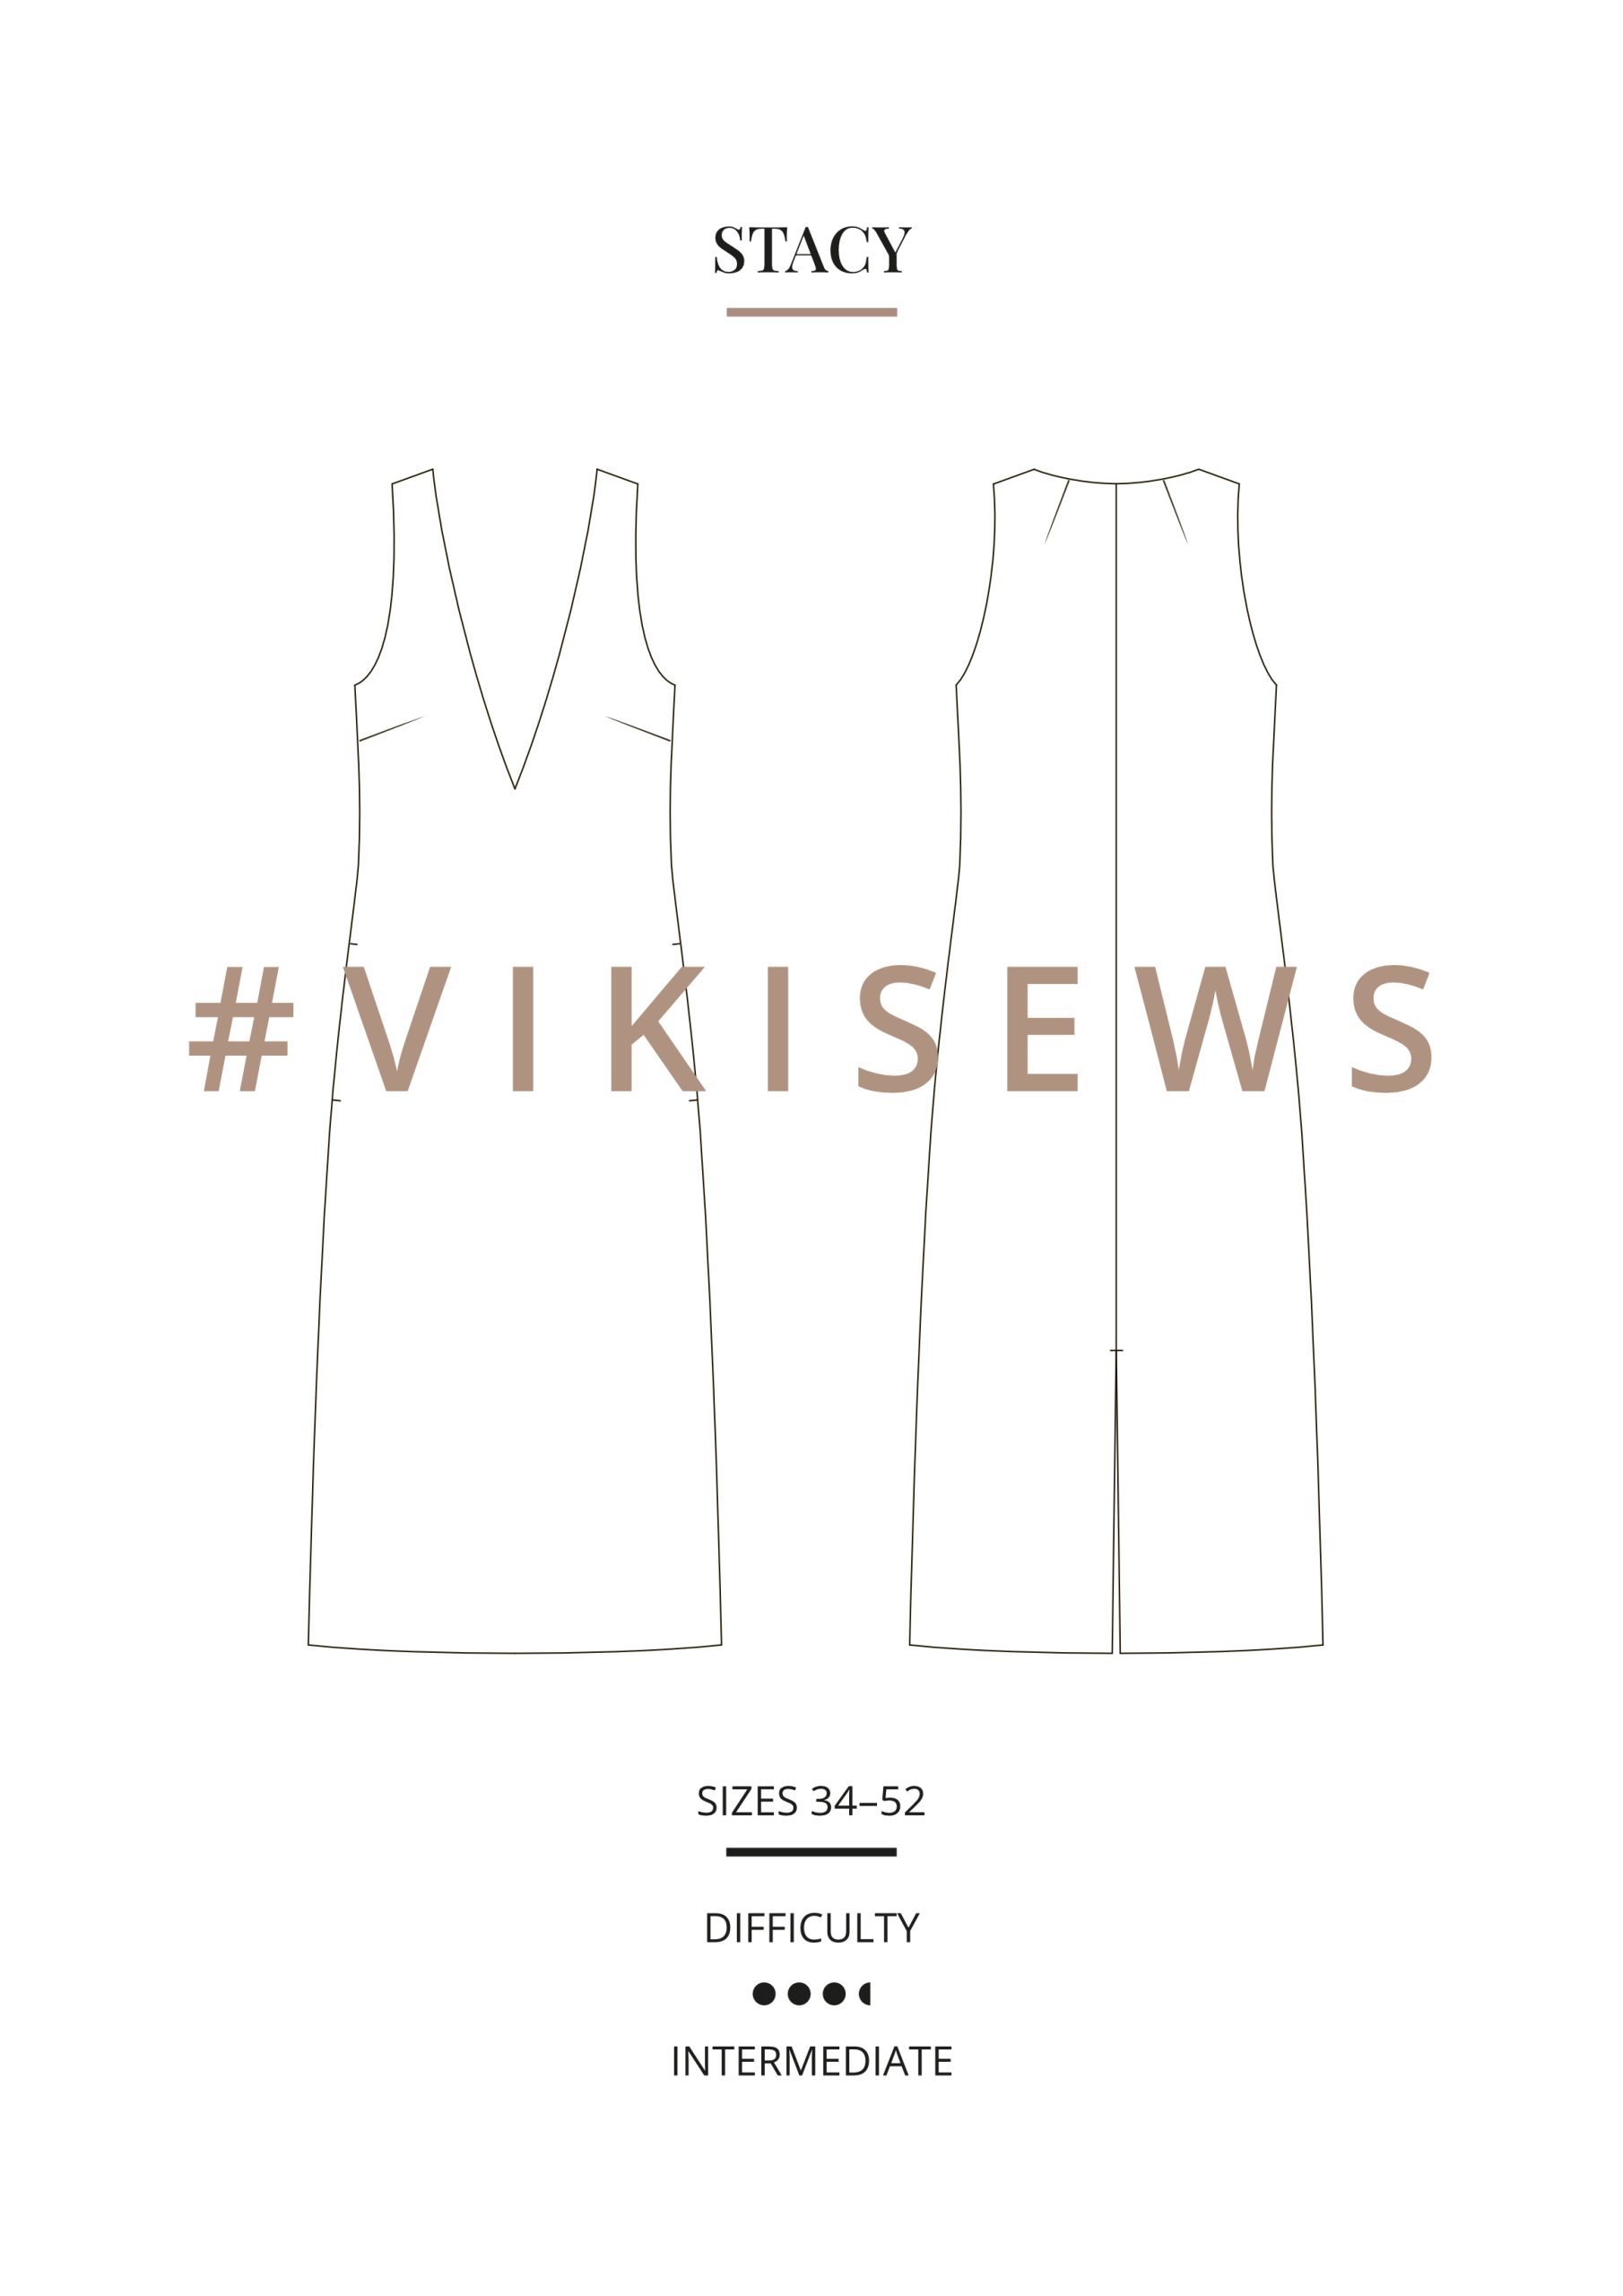 Vikisews Stacy Dress